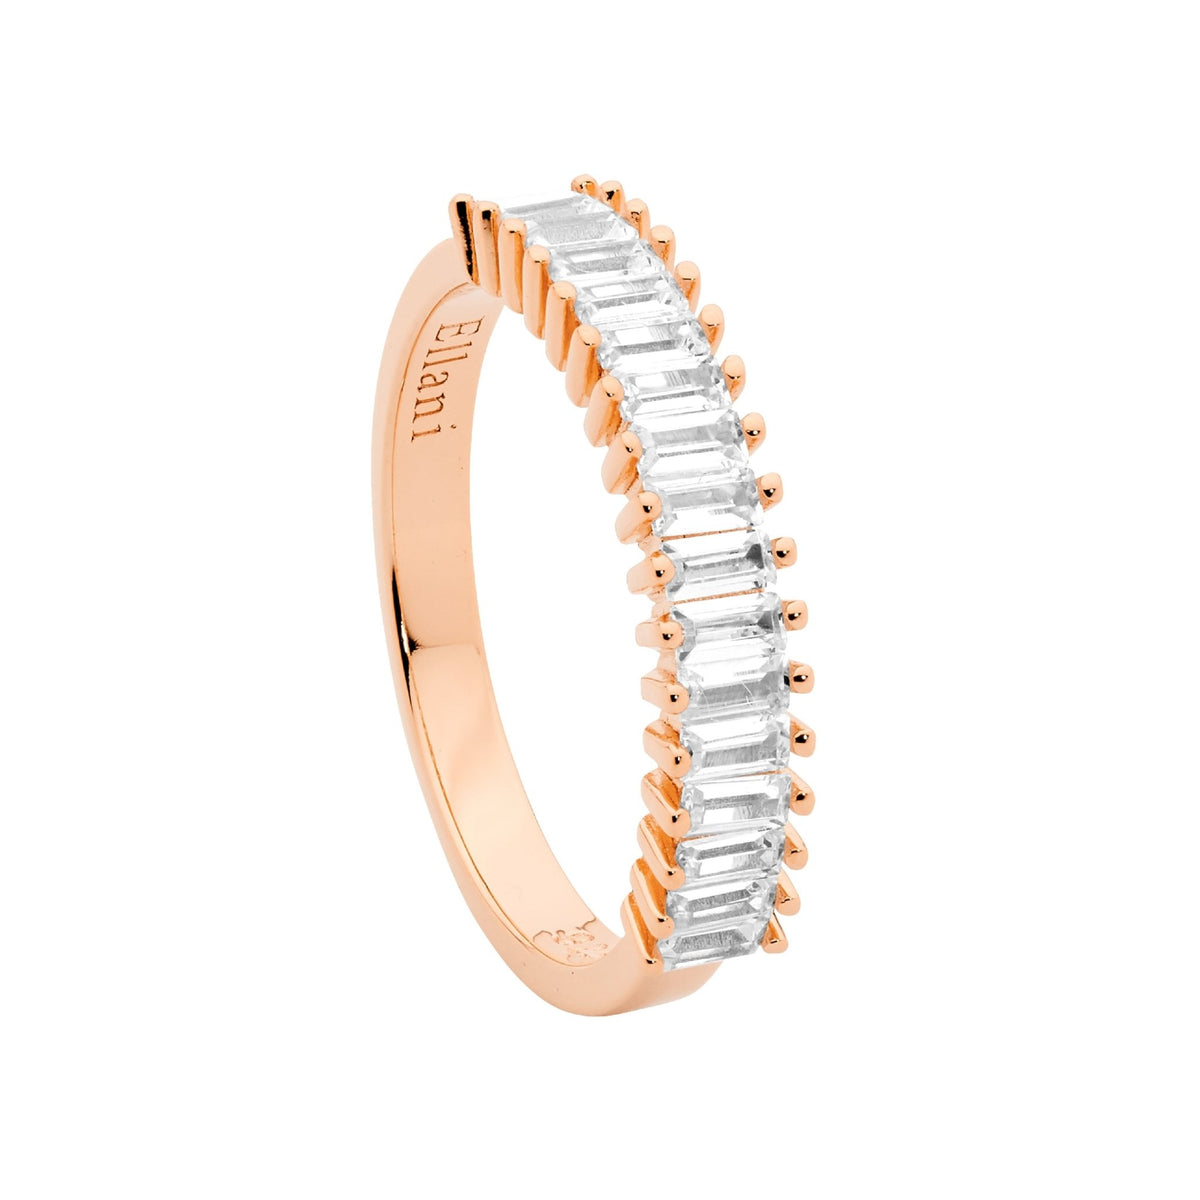 Ring Gold - R514G - Markbridge Jewellers